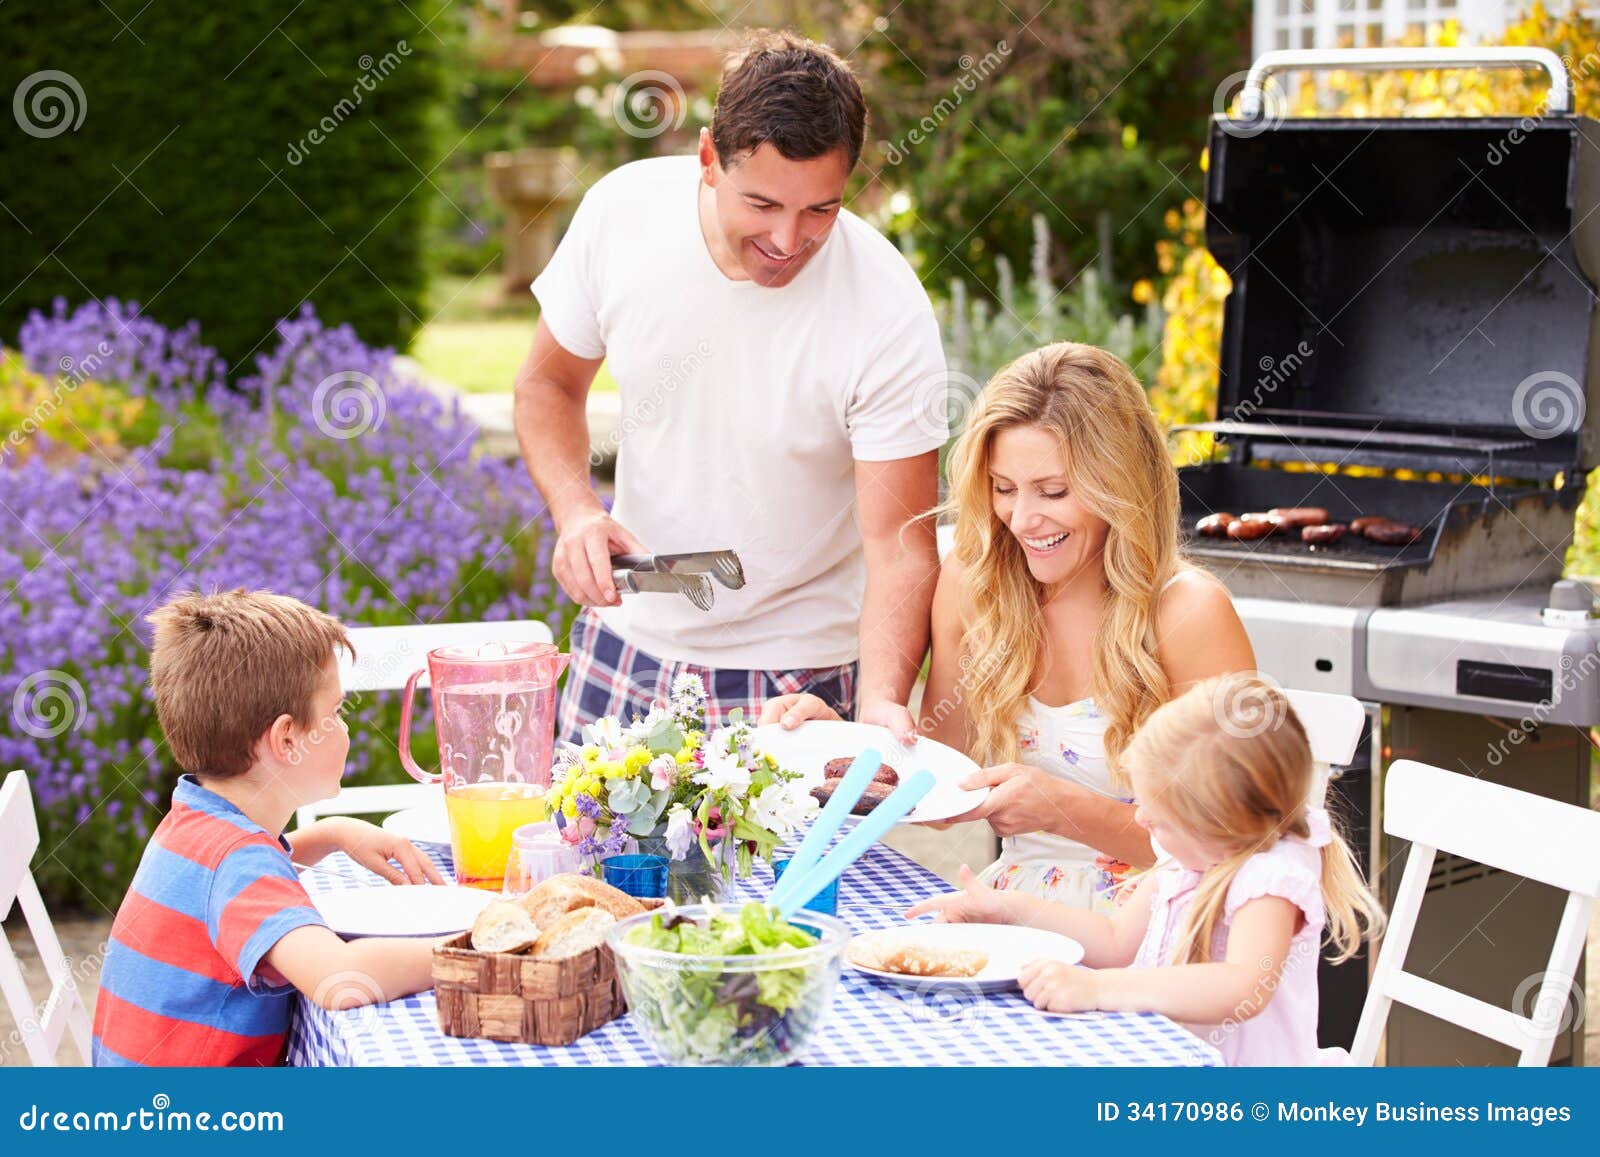 family enjoying outdoor barbeque in garden